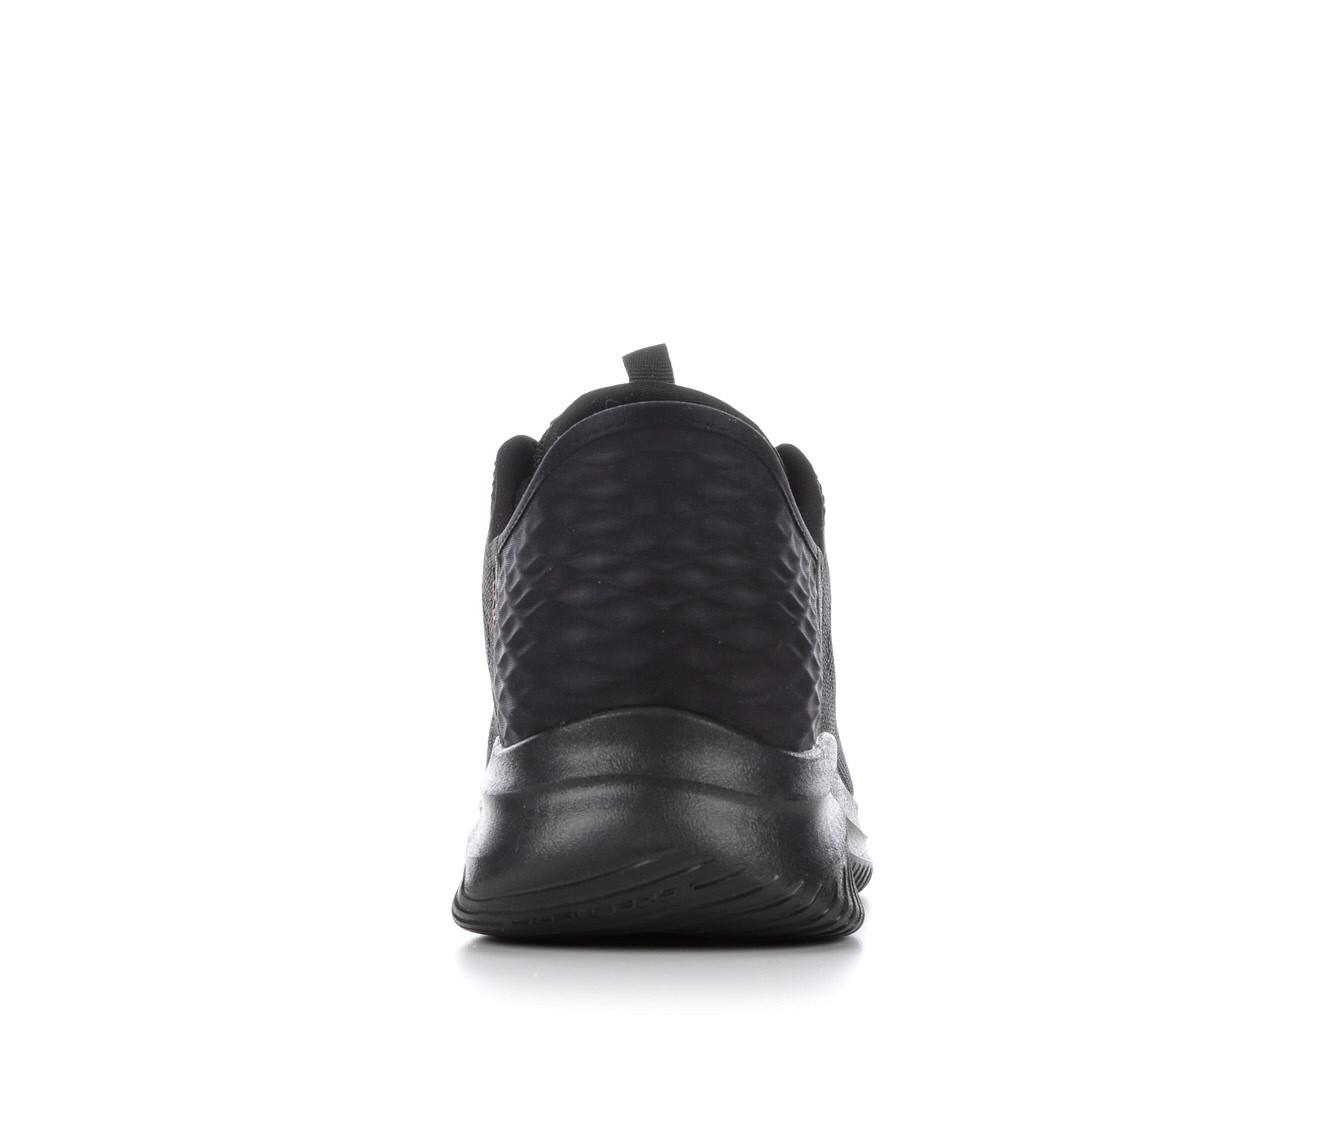 Men's Skechers Slip-Ins anthracite gray sneakers (232457)